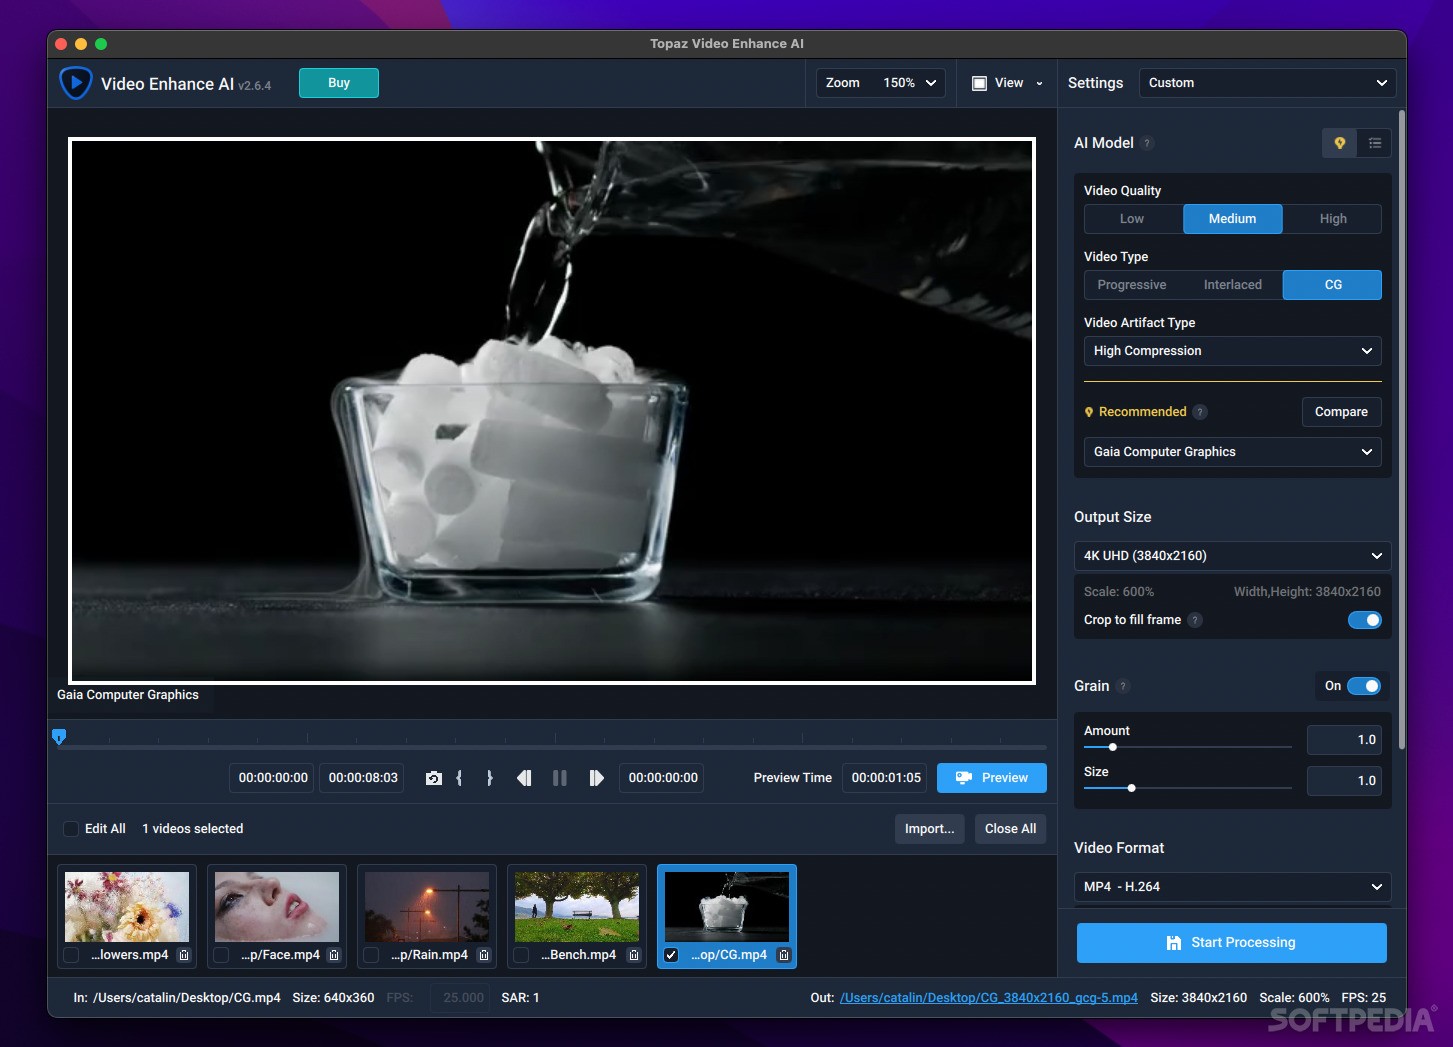 Topaz Video Enhance AI 3.5.2 for windows download free